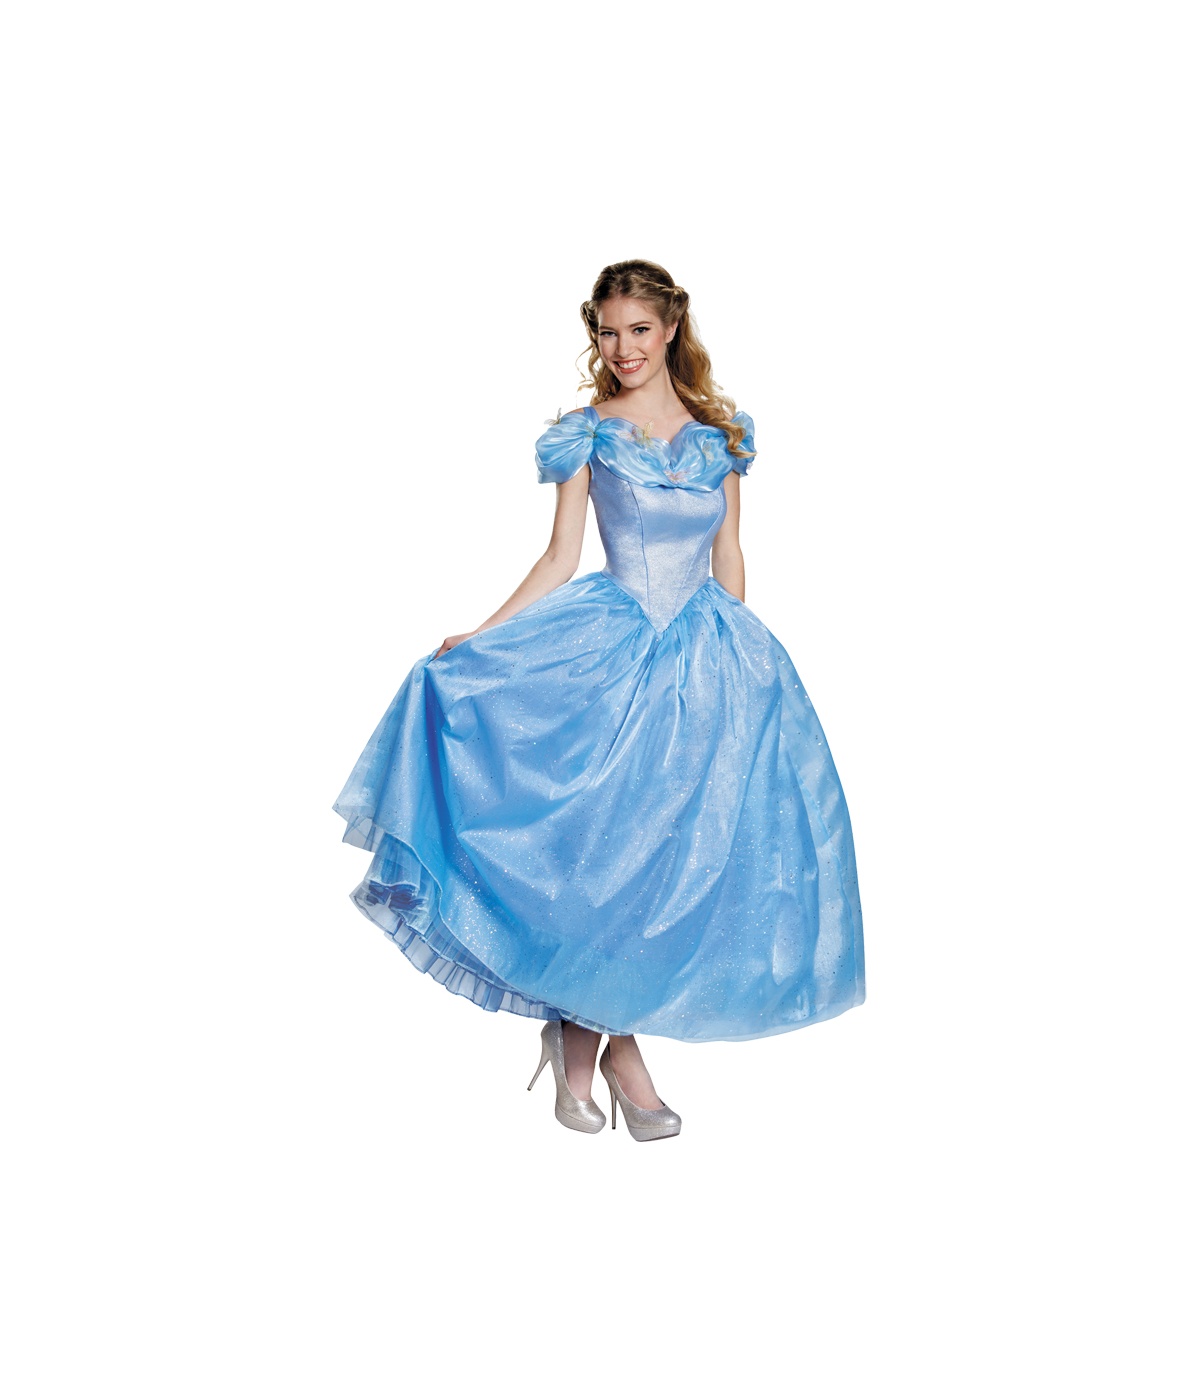 Cinderella Dress | Cinderella dresses, Enchanted dress, Cinderella dress  costume